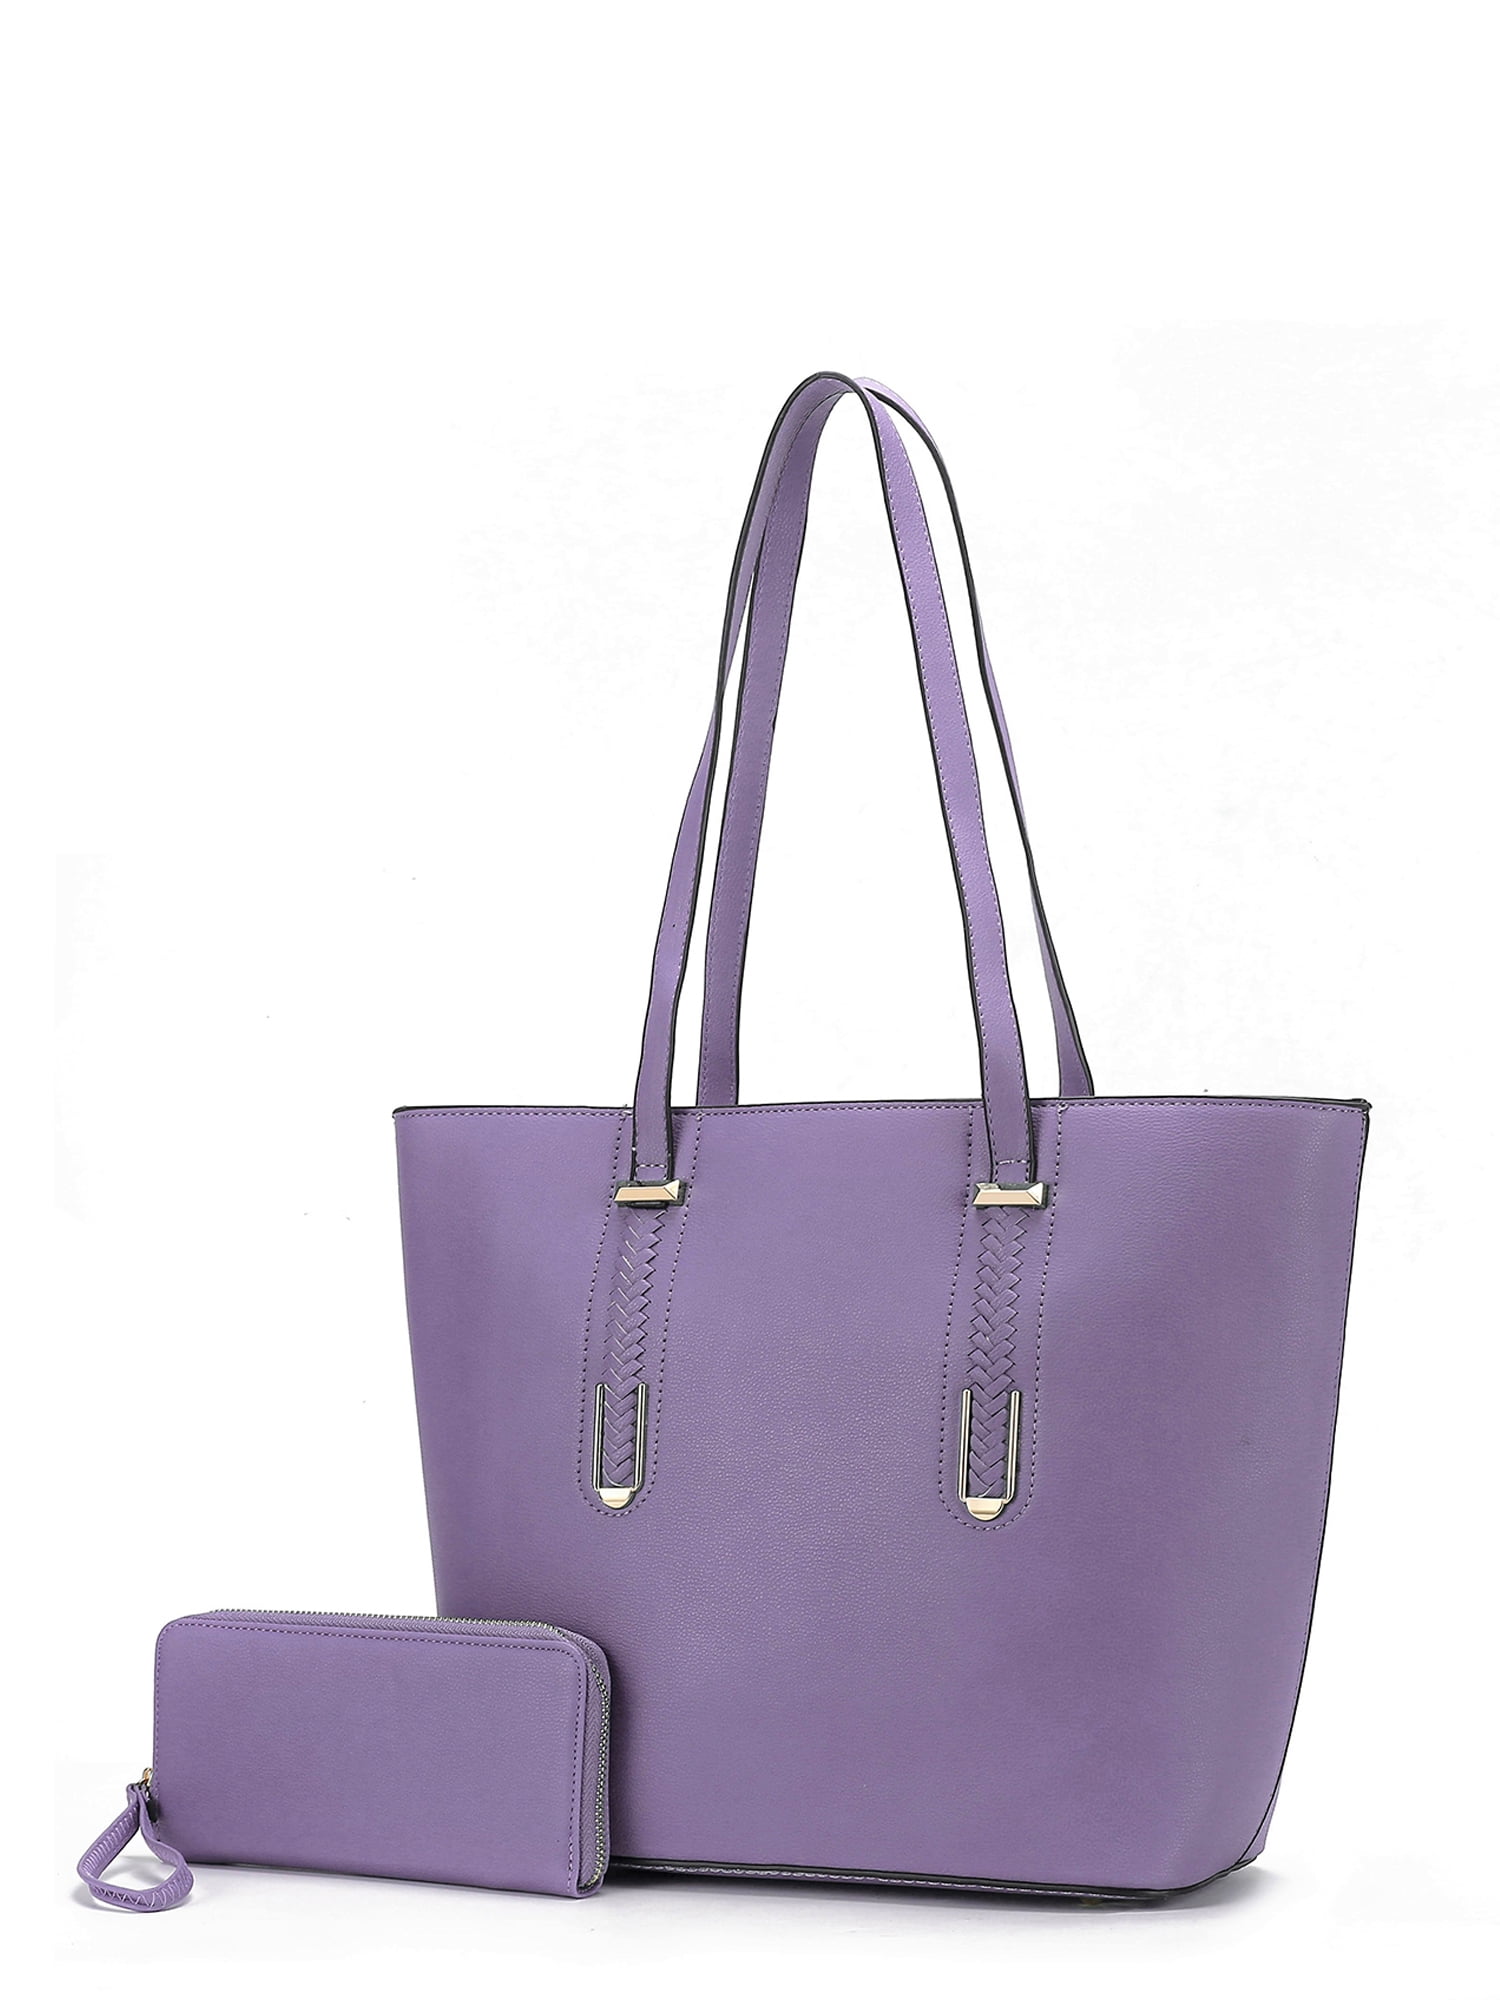 Buy MKF Collection Satchel Bag for Womenââ‚¬â„¢s, Vegan Leather Crossbody  Top-Handle Handbag Purse at Amazon.in